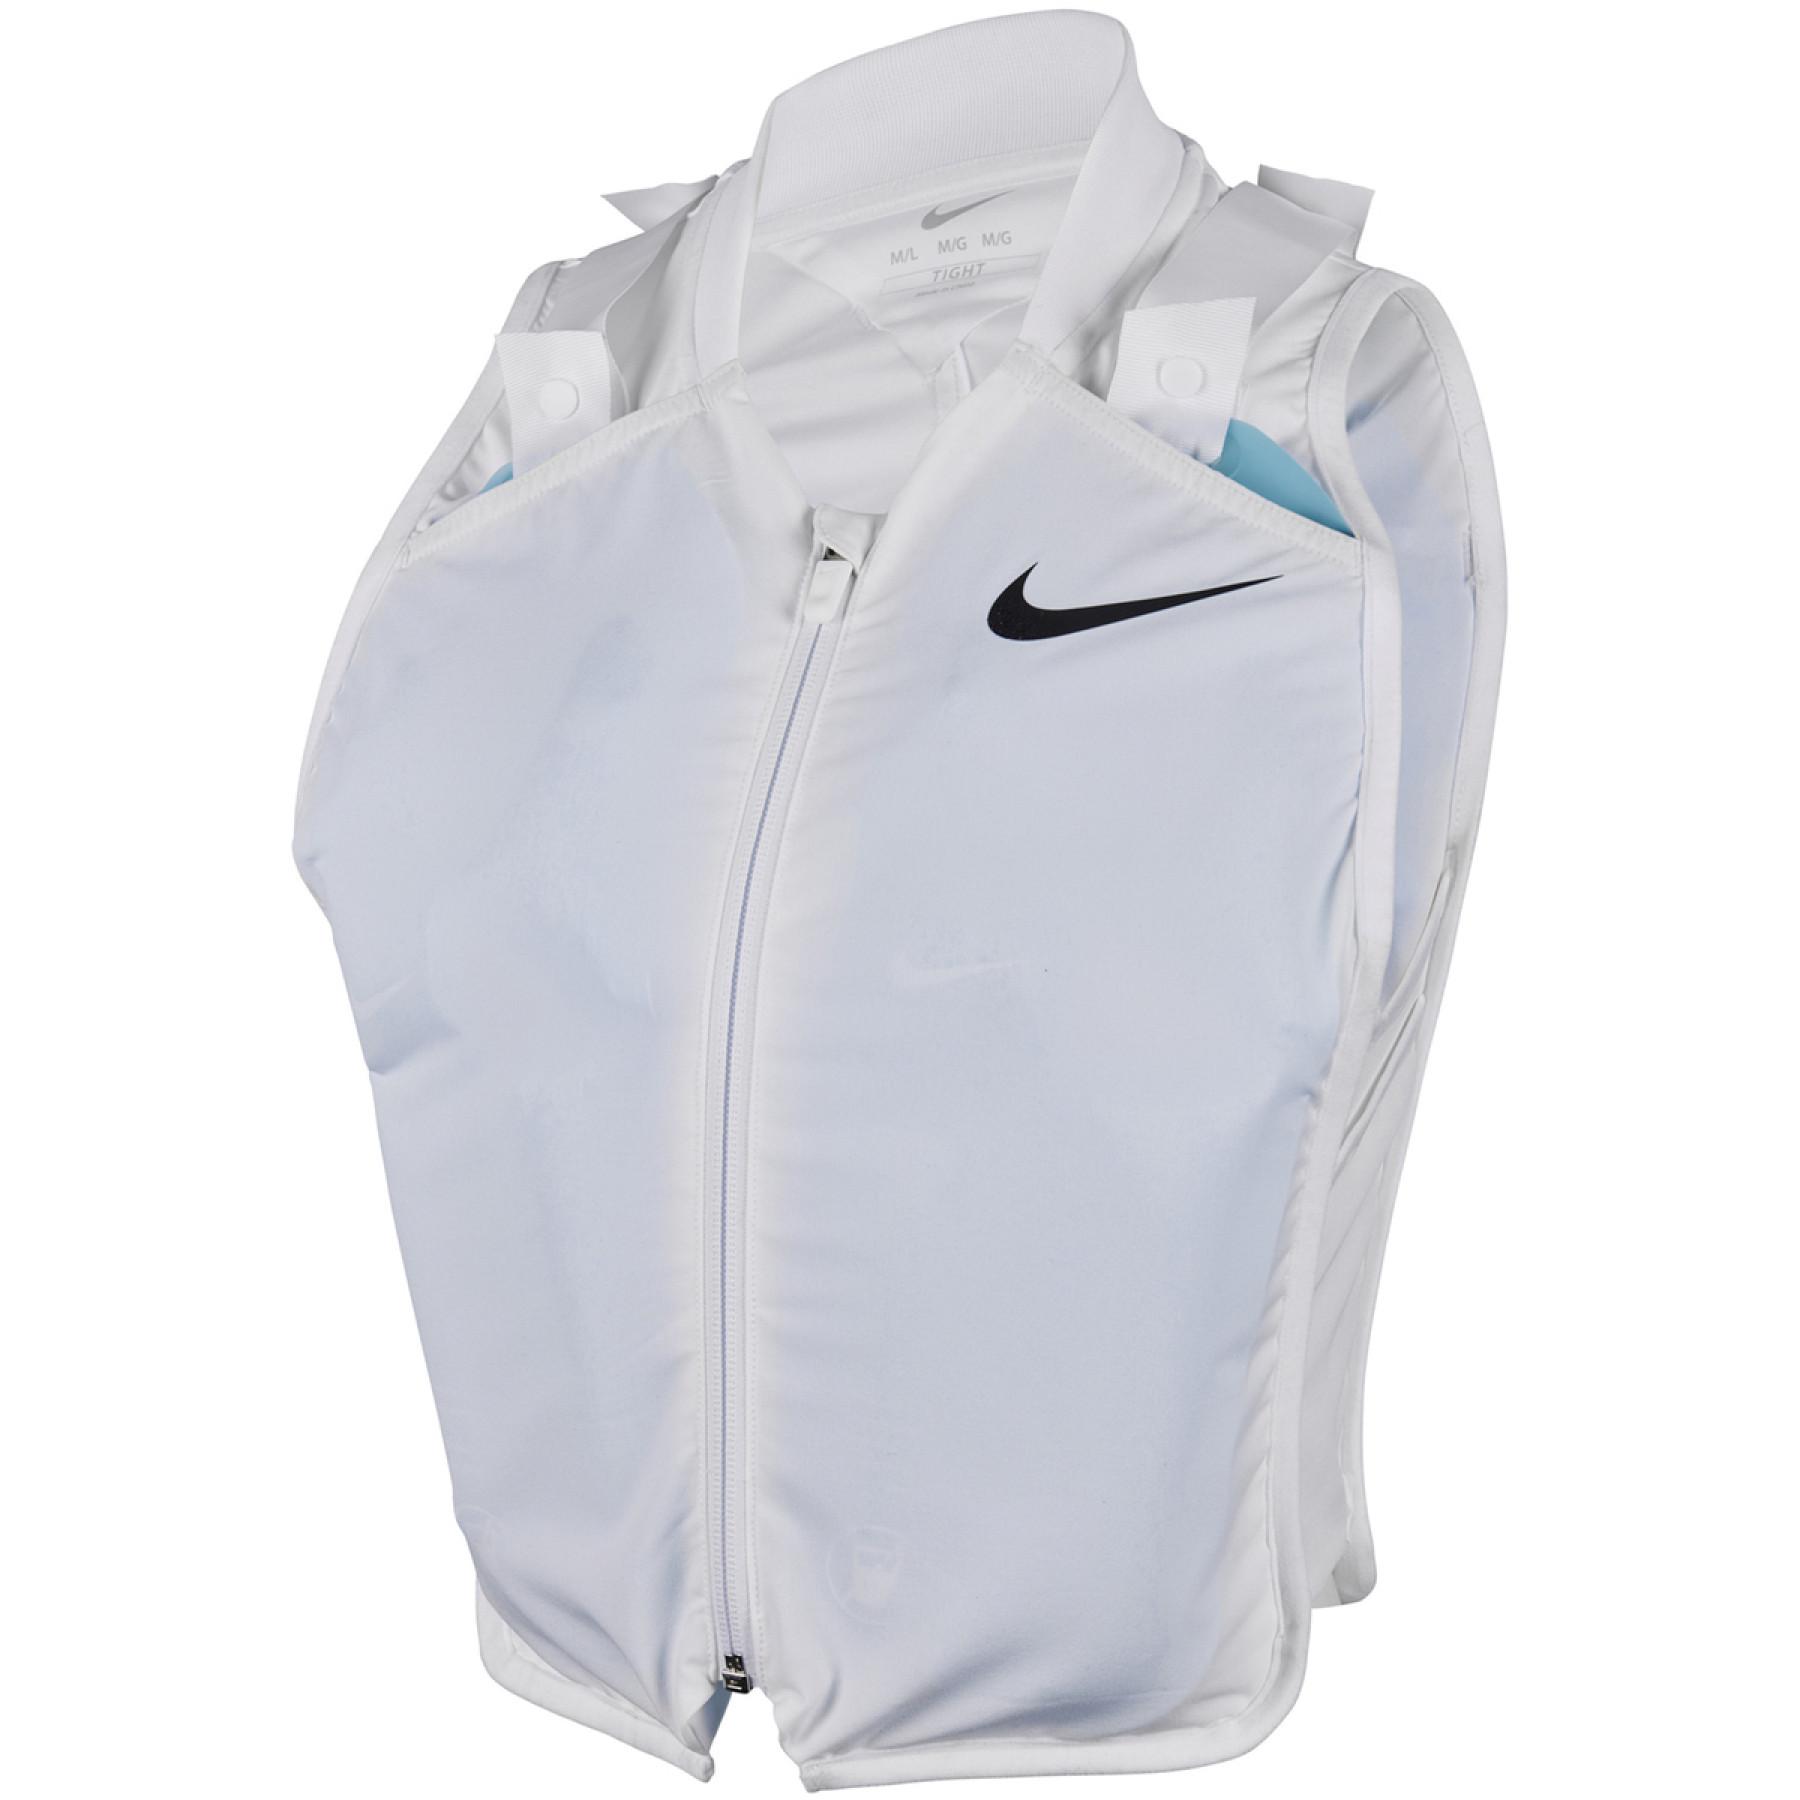 Sleeveless running jacket Nike Precool